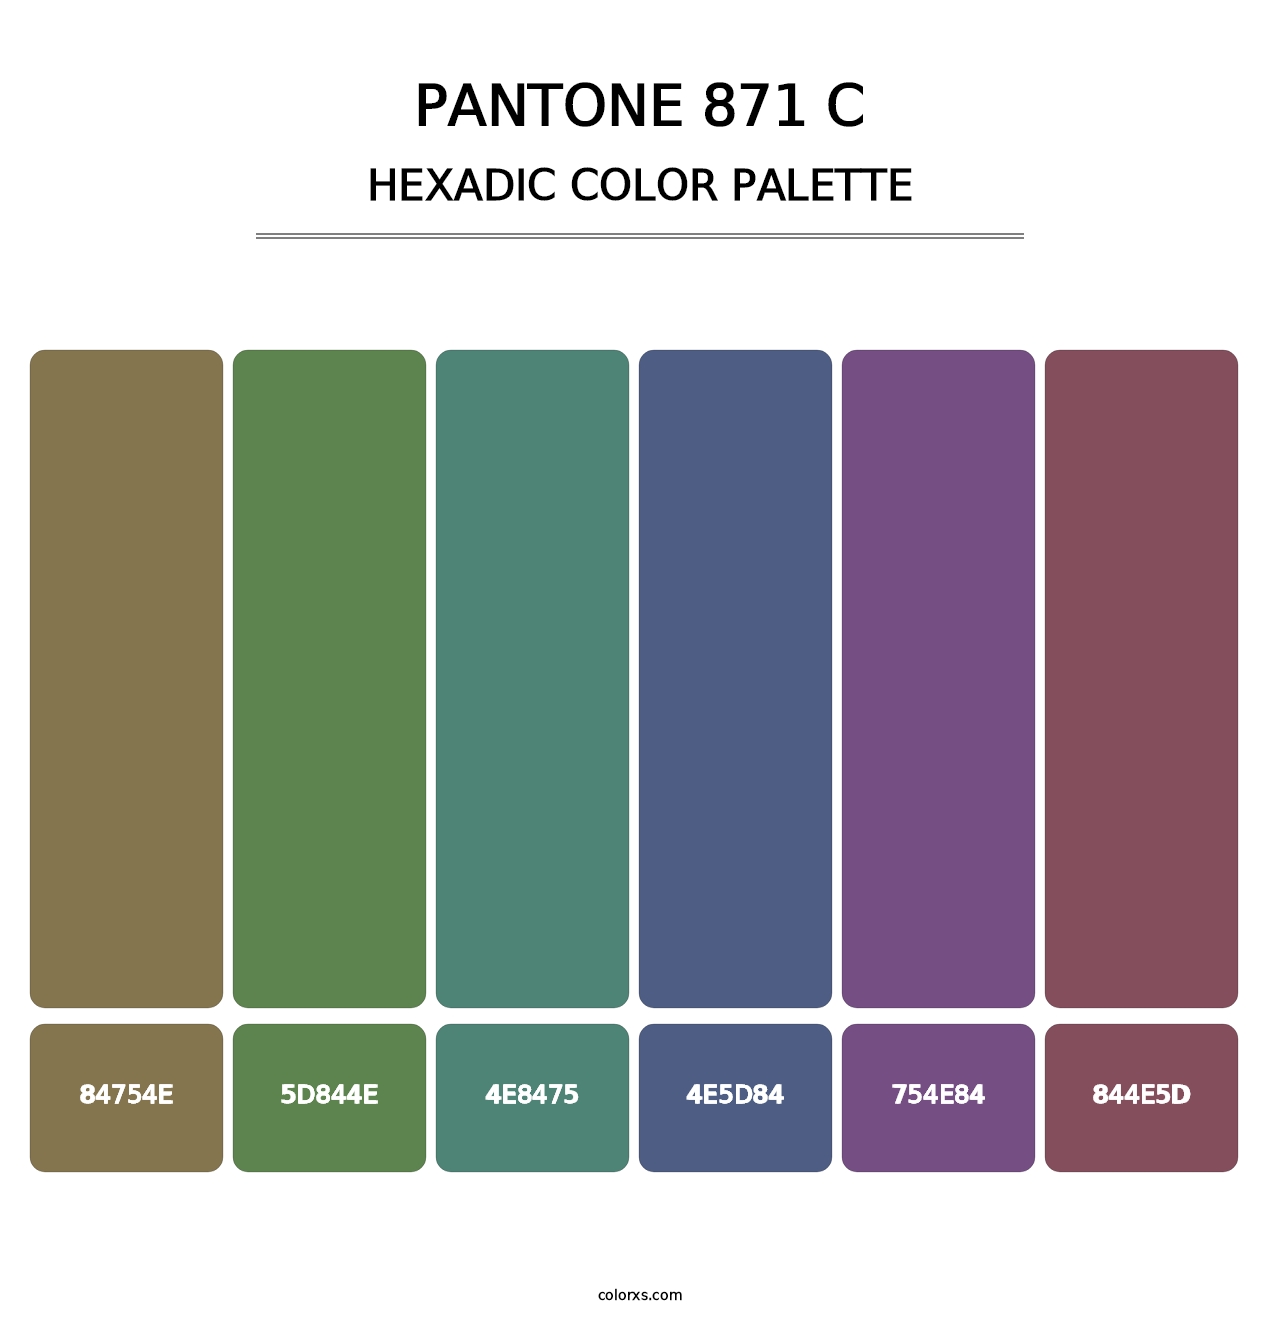 PANTONE 871 C - Hexadic Color Palette